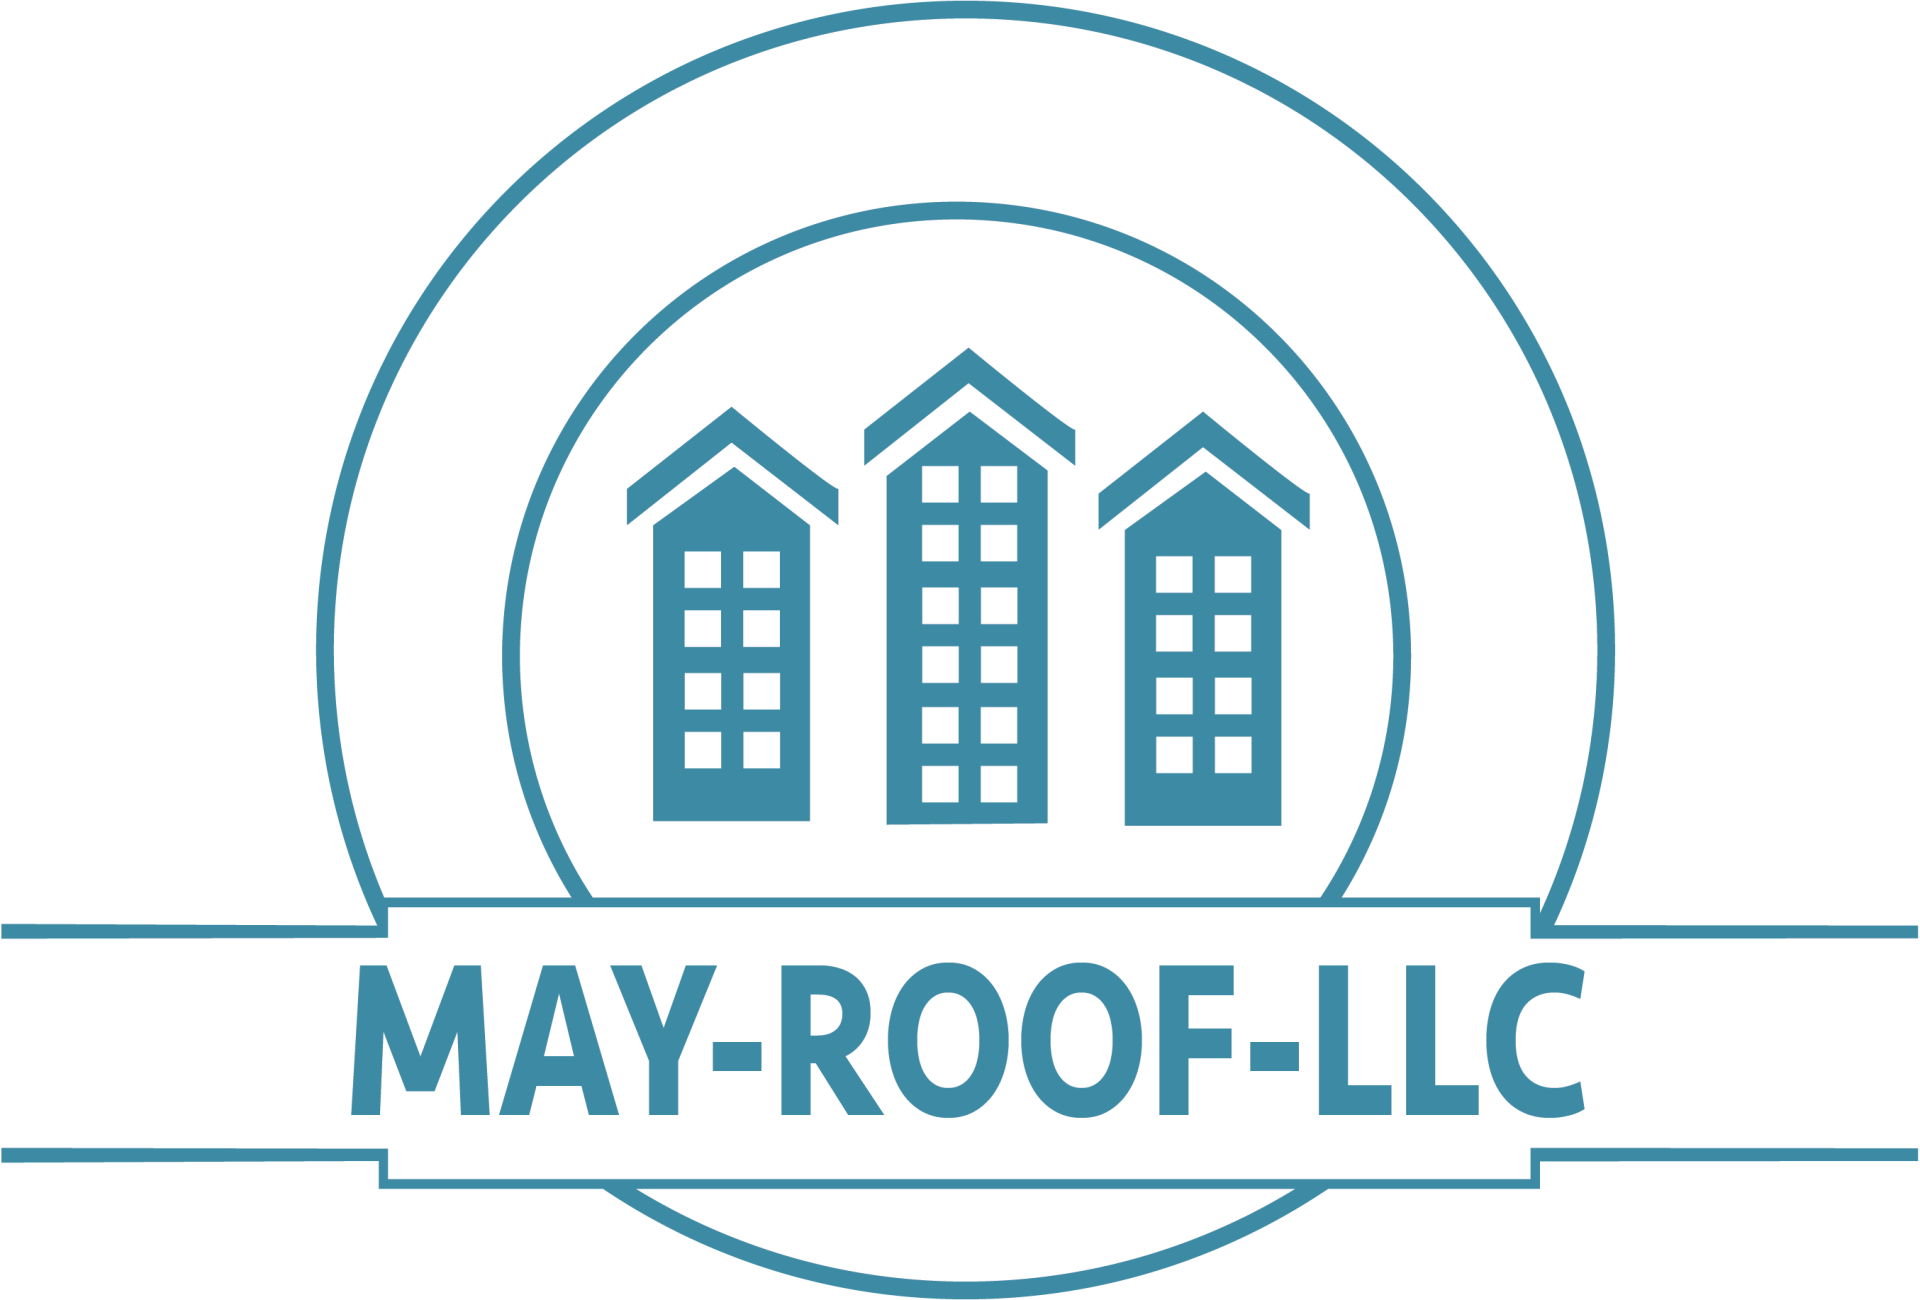 May Roof LLC